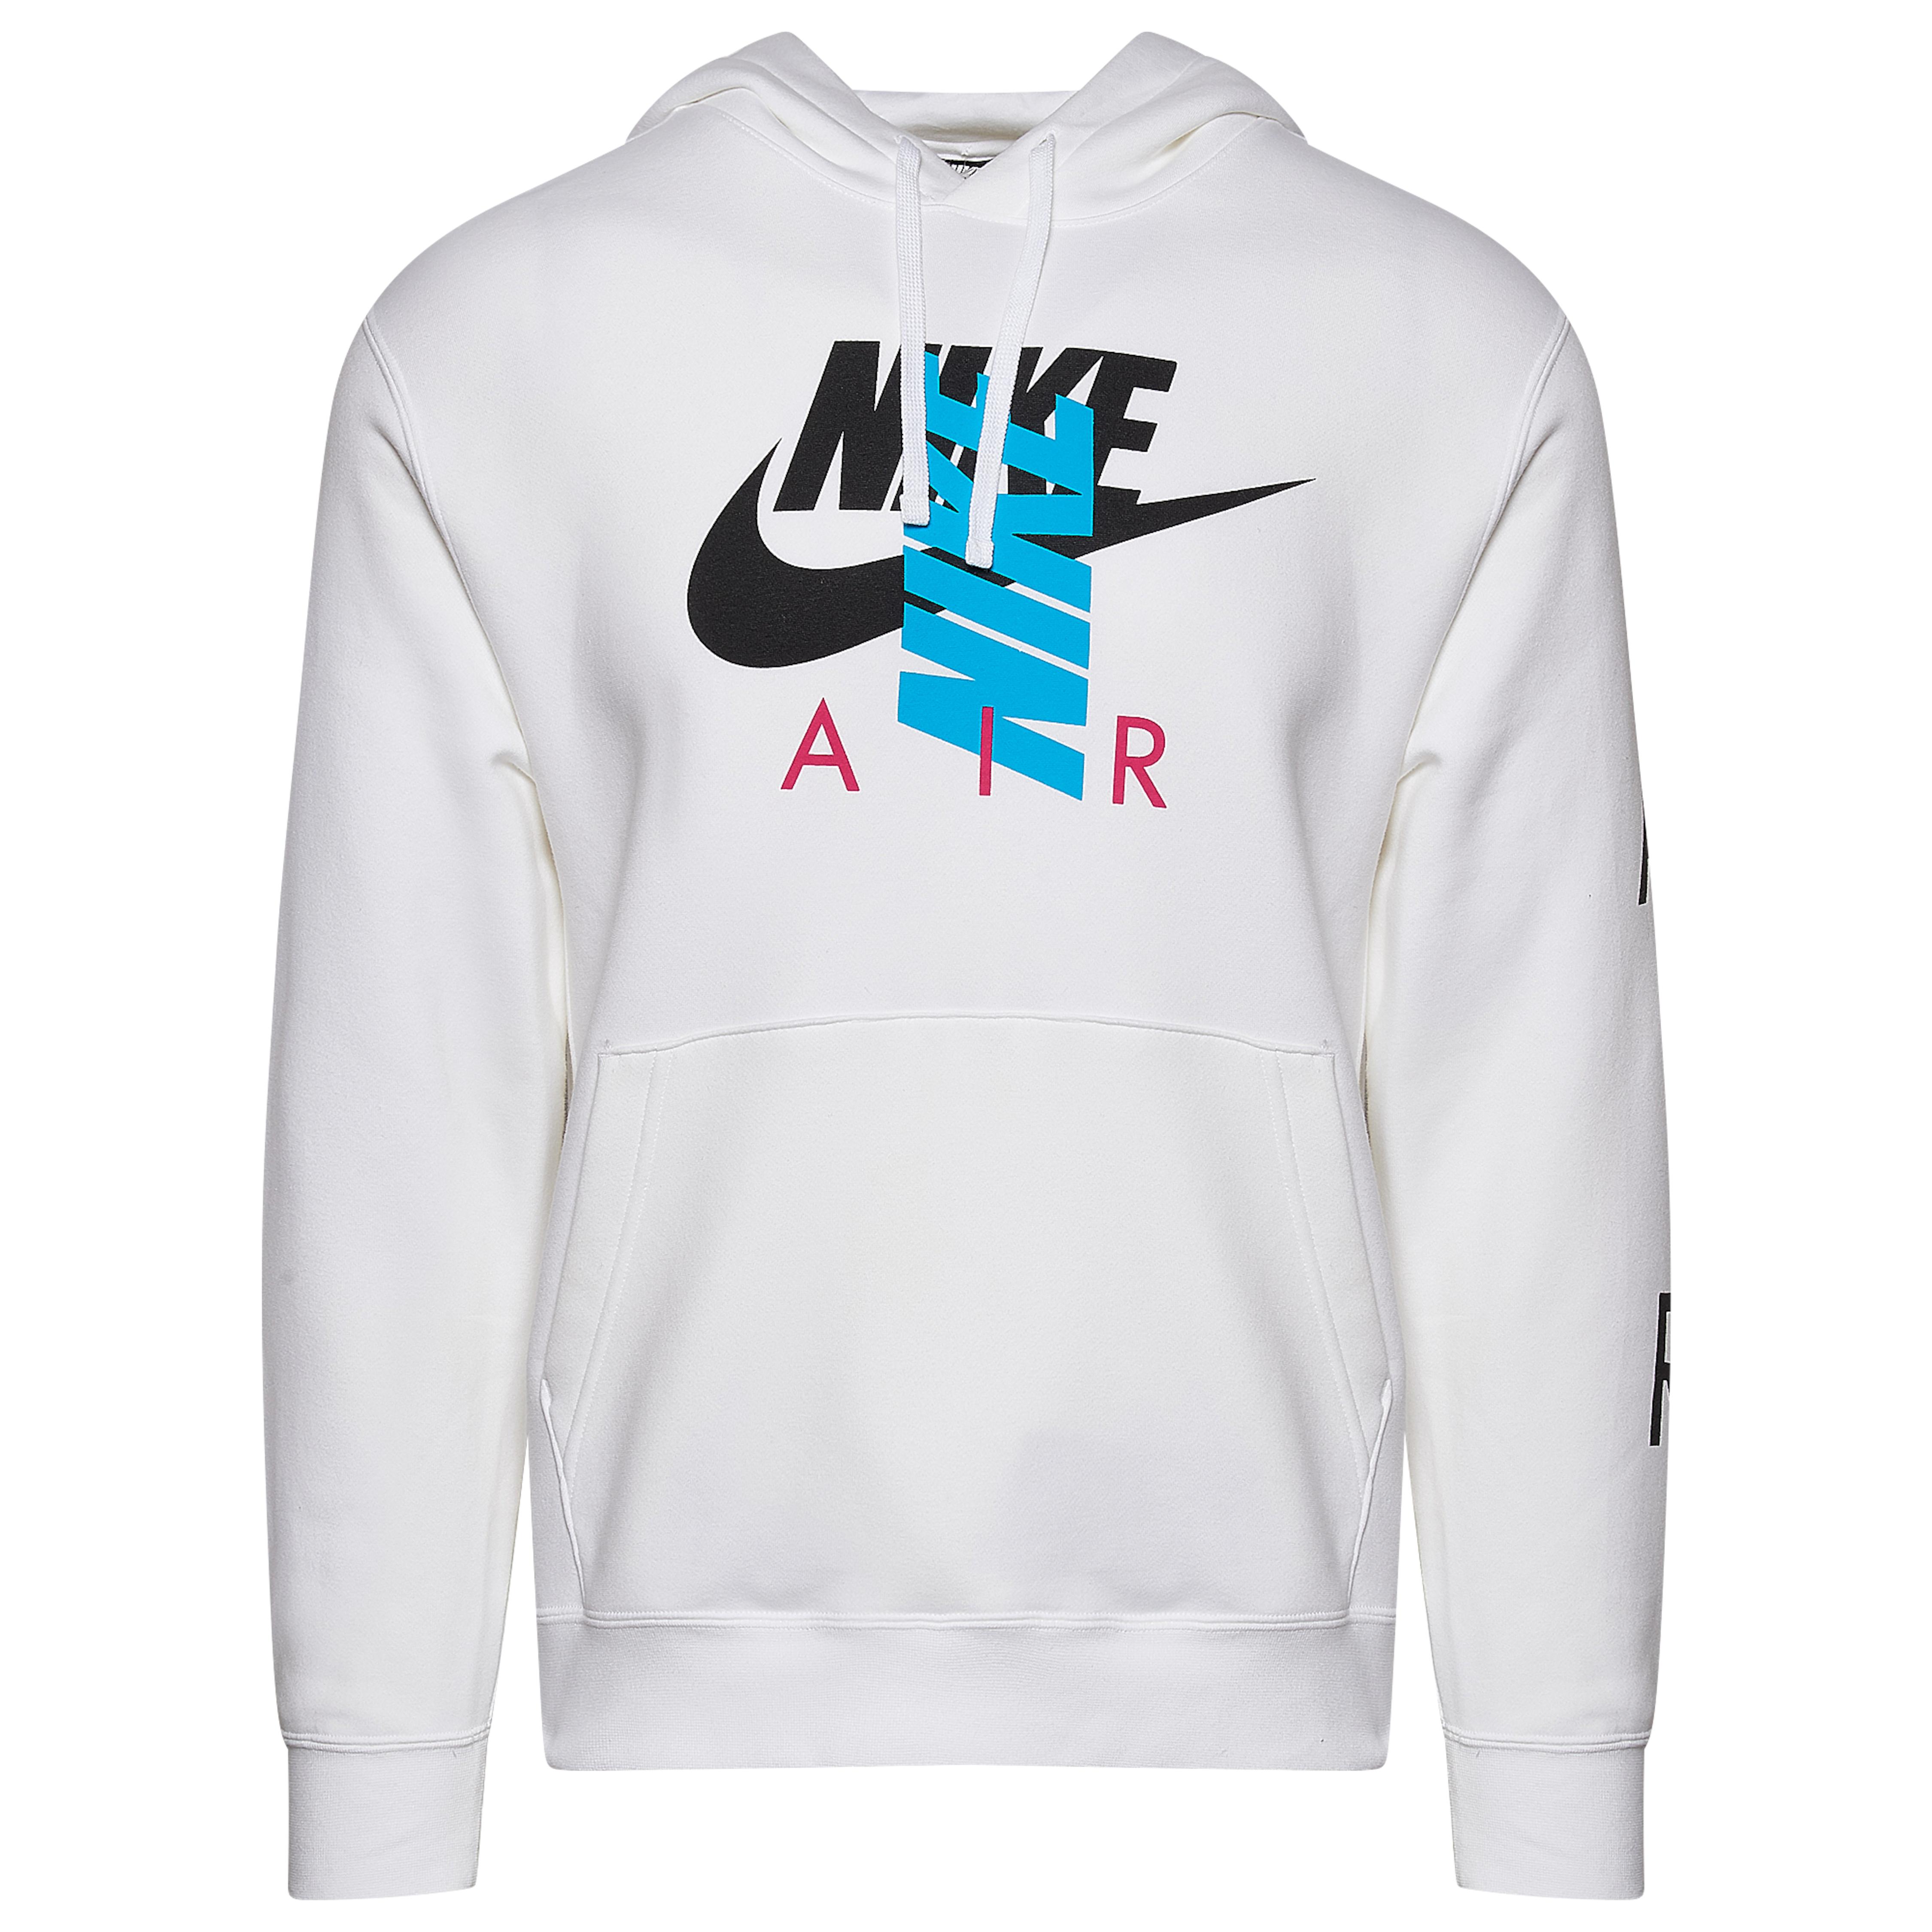 Nike Cotton Cb Air Hoodie in White 